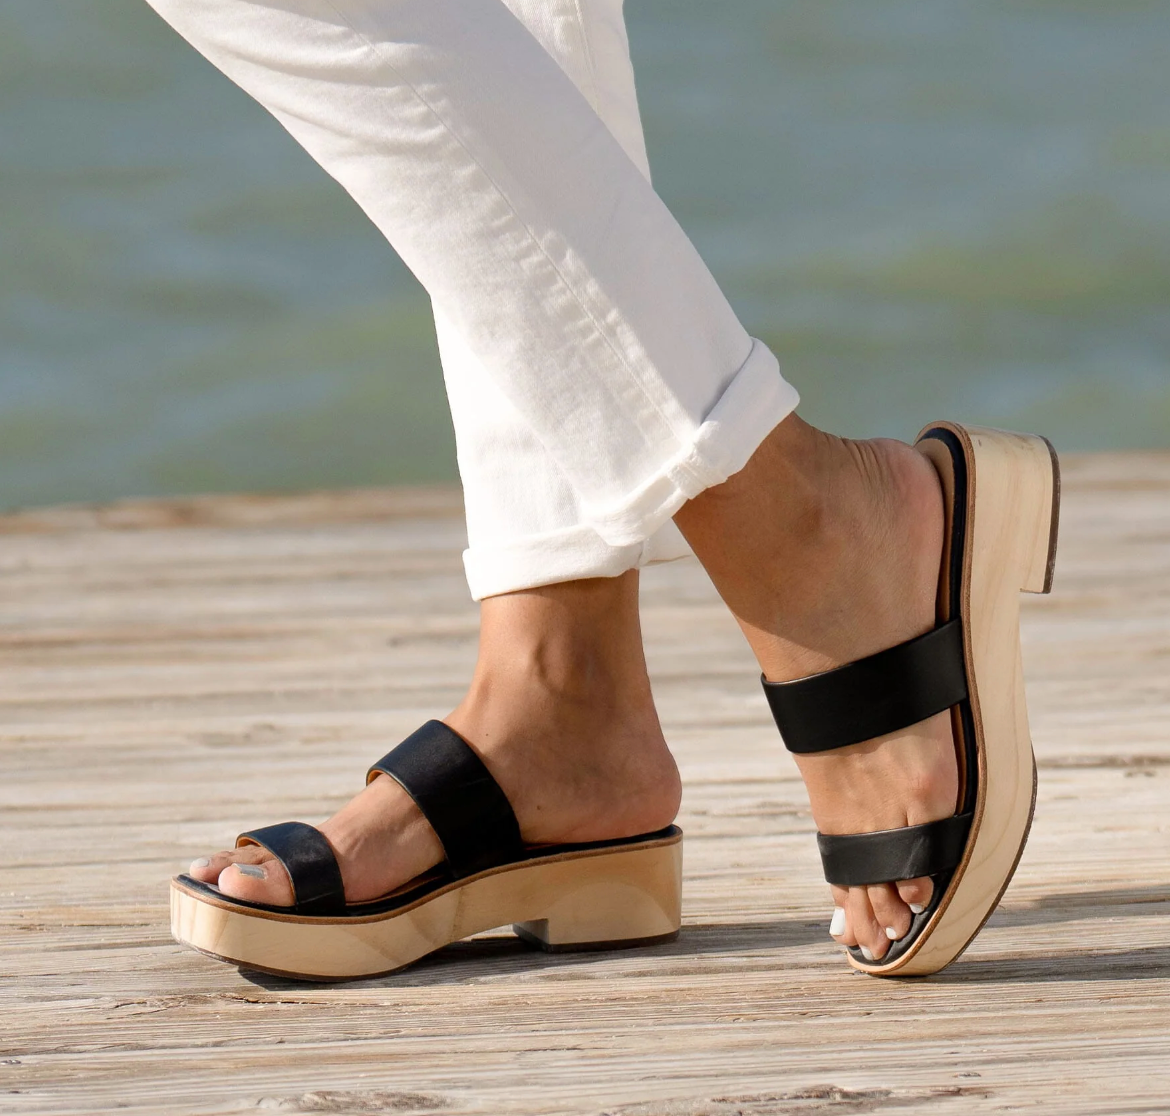 22 Stunning Pairs Of Sandals